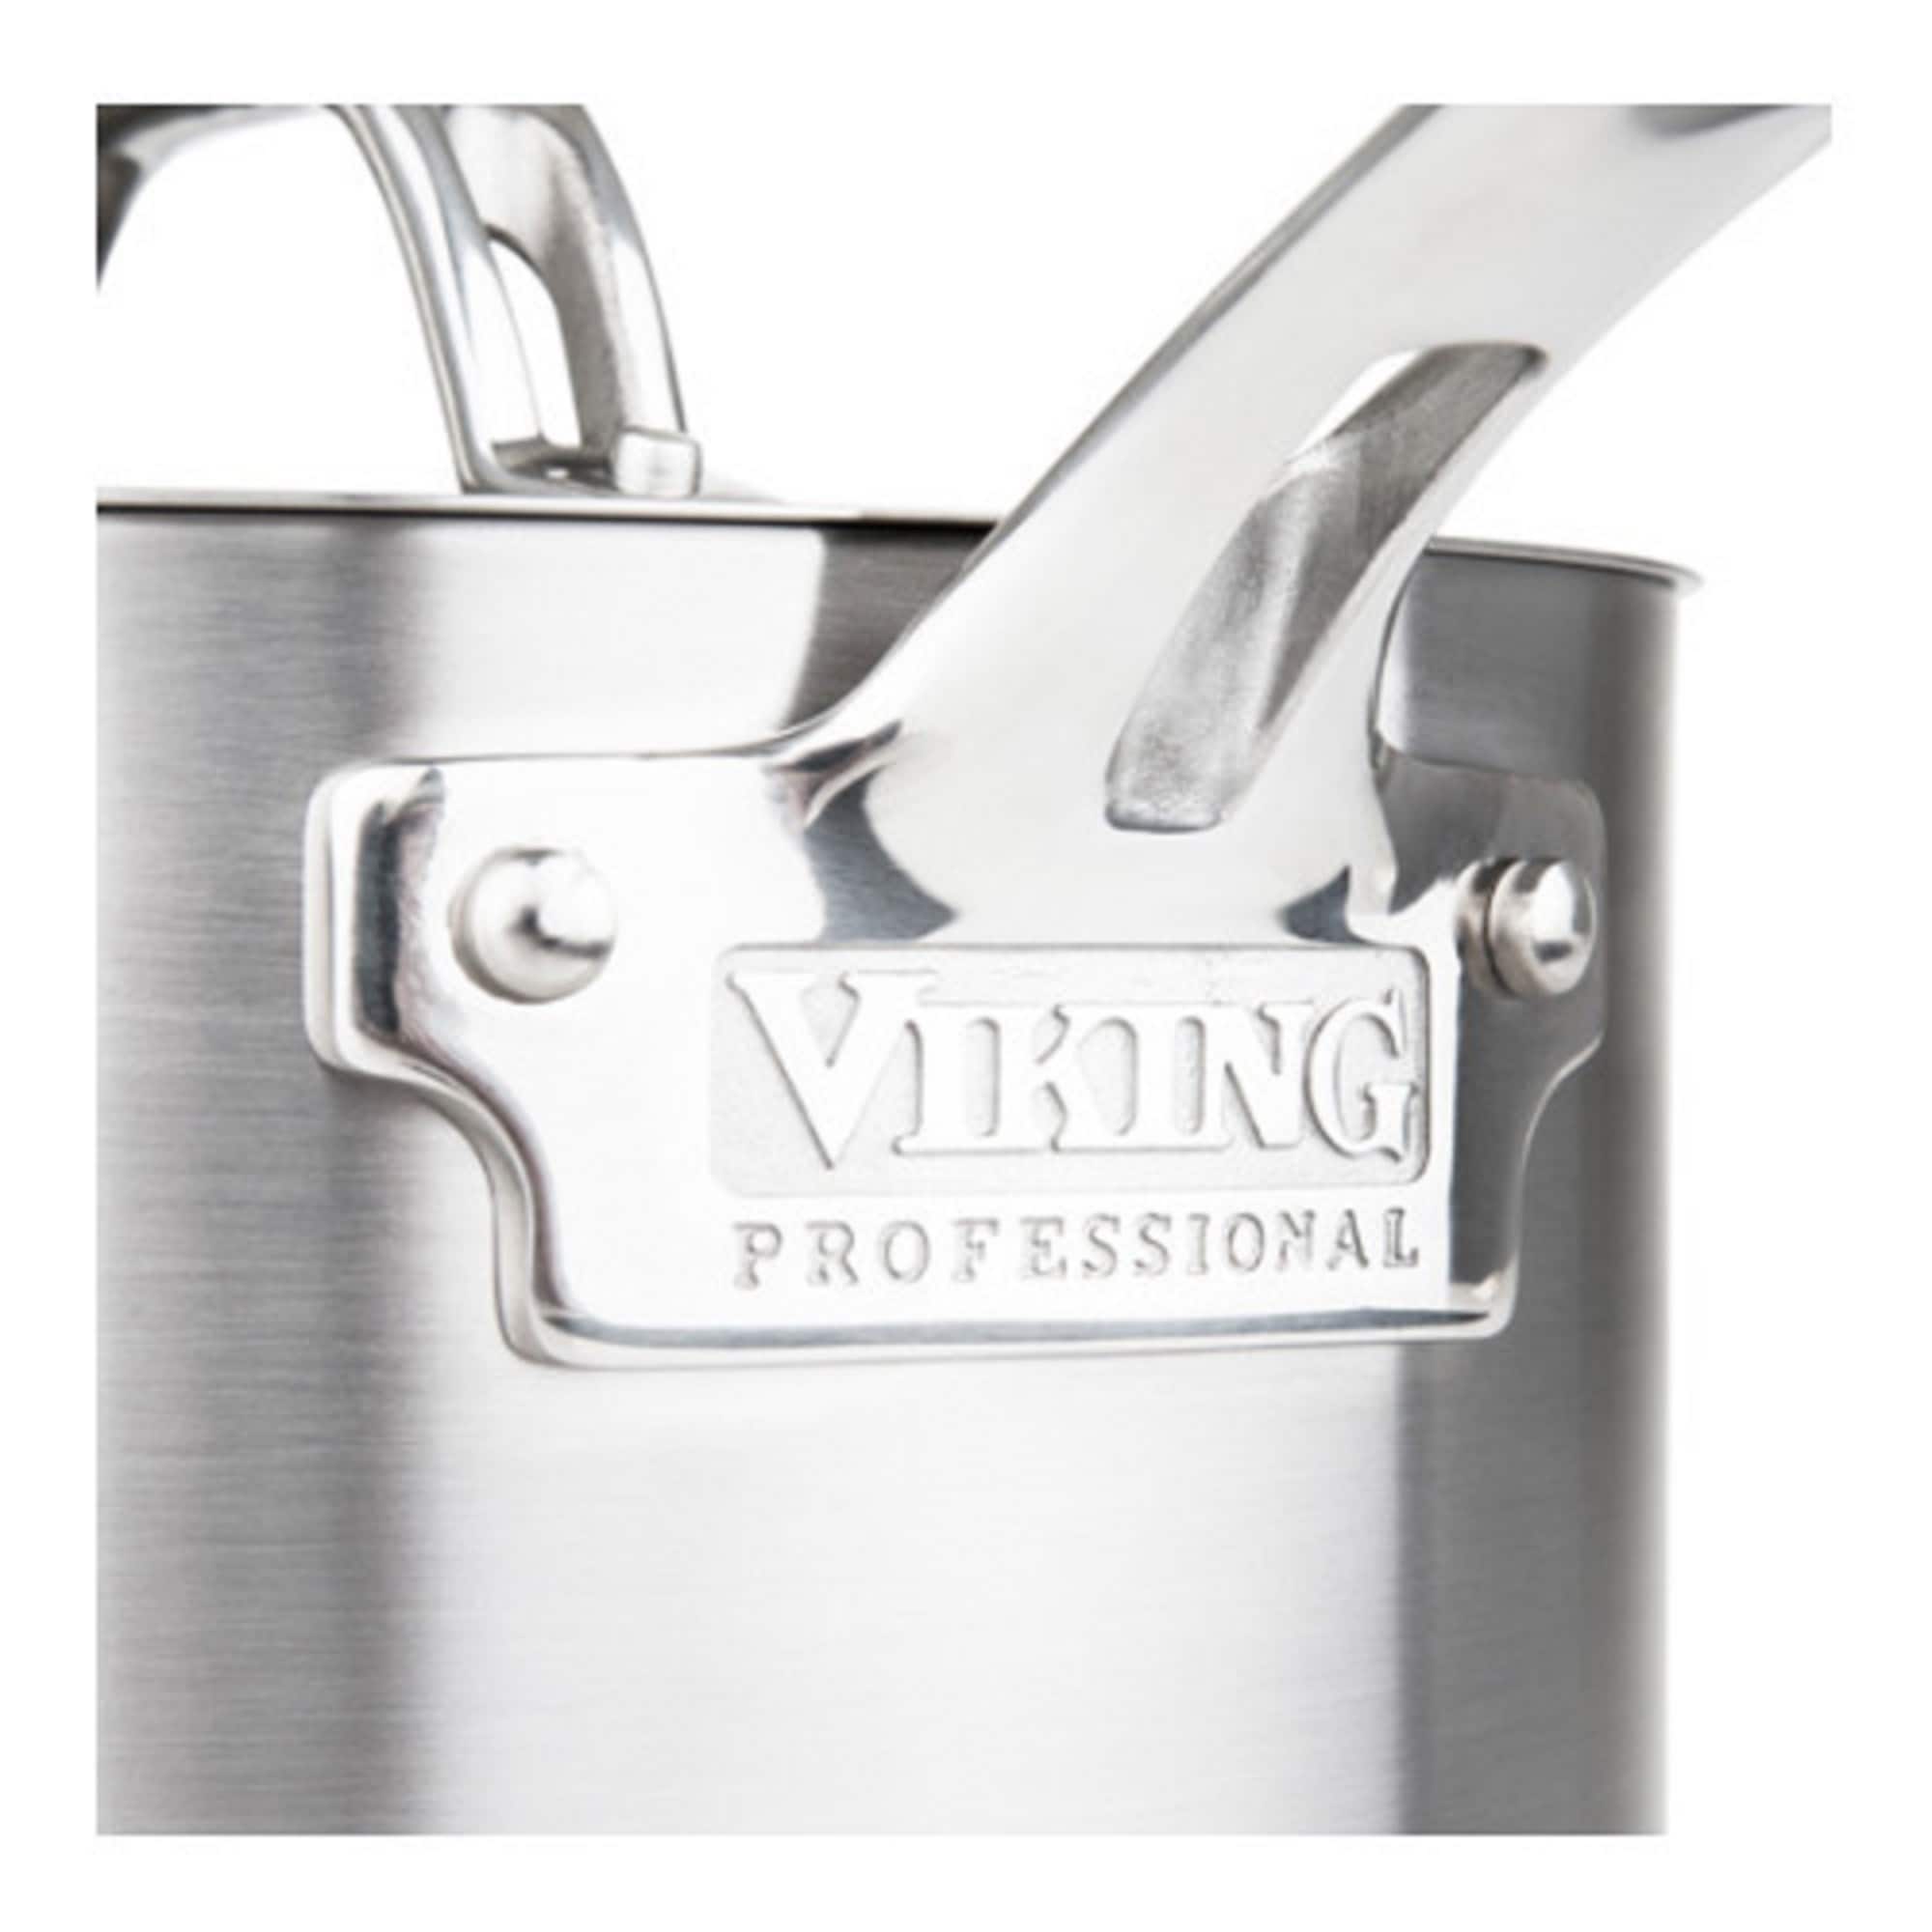 Viking Professional 5-Ply 2 Quart Sauce Pan